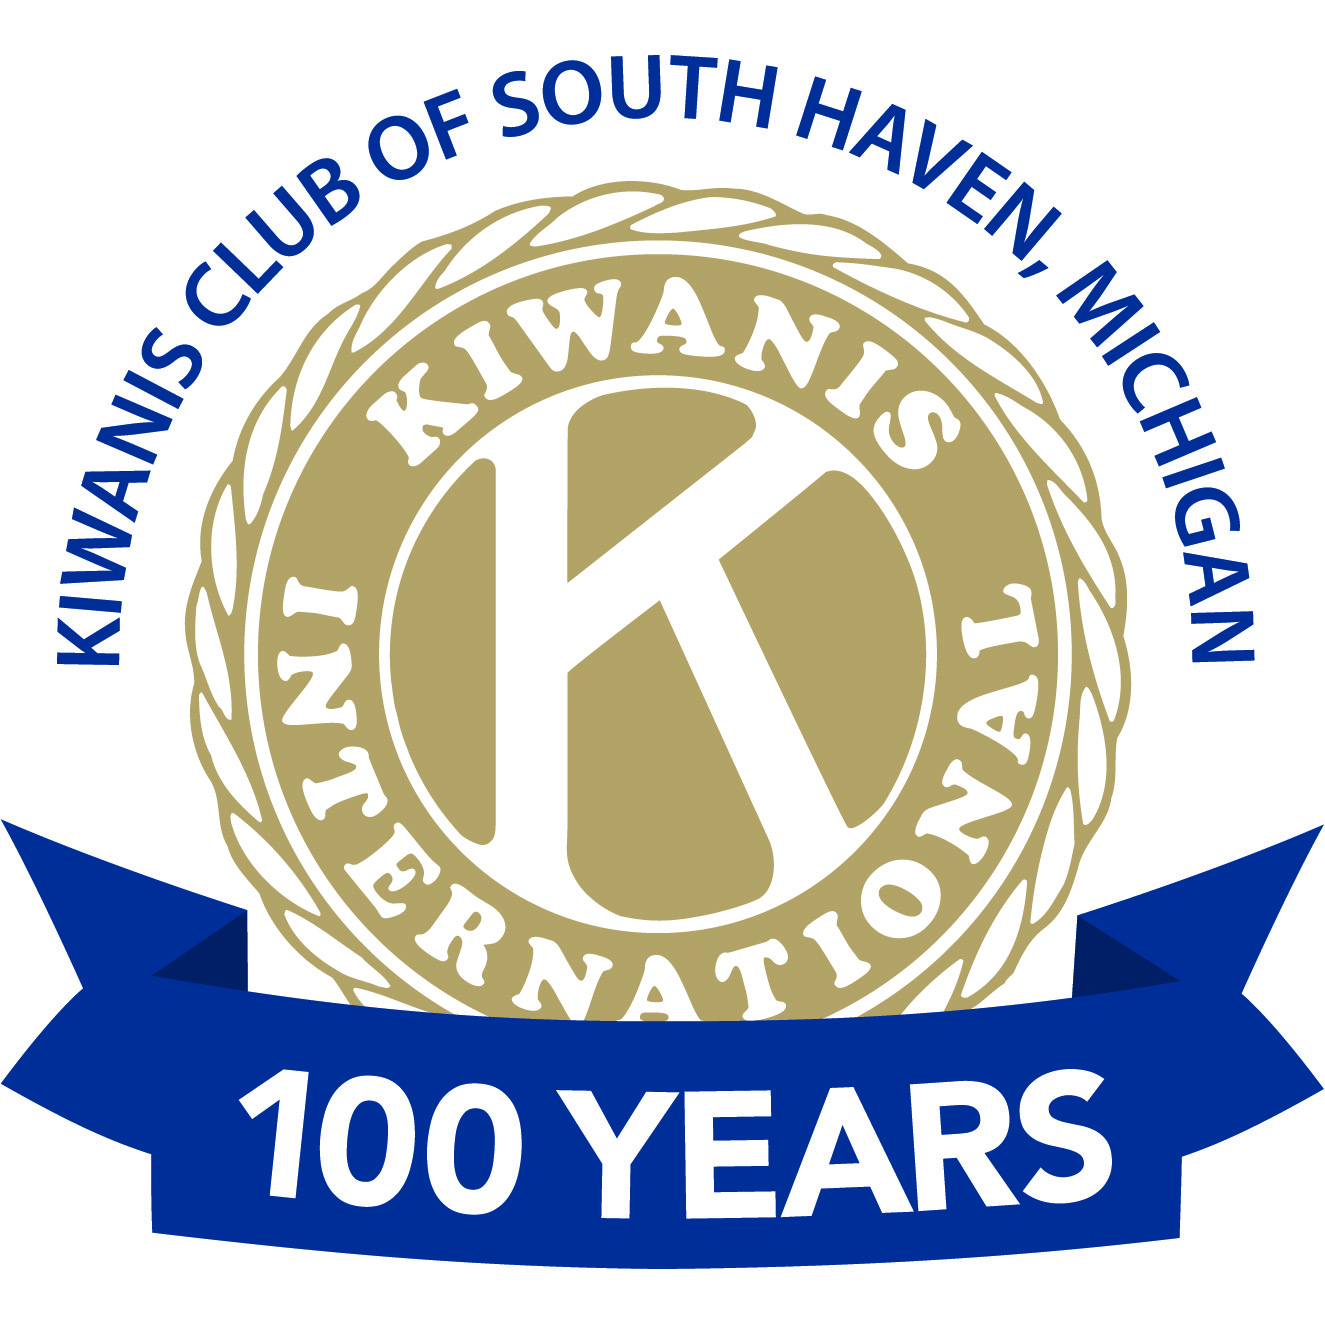 Kiwanis Club of South Haven, Michigan